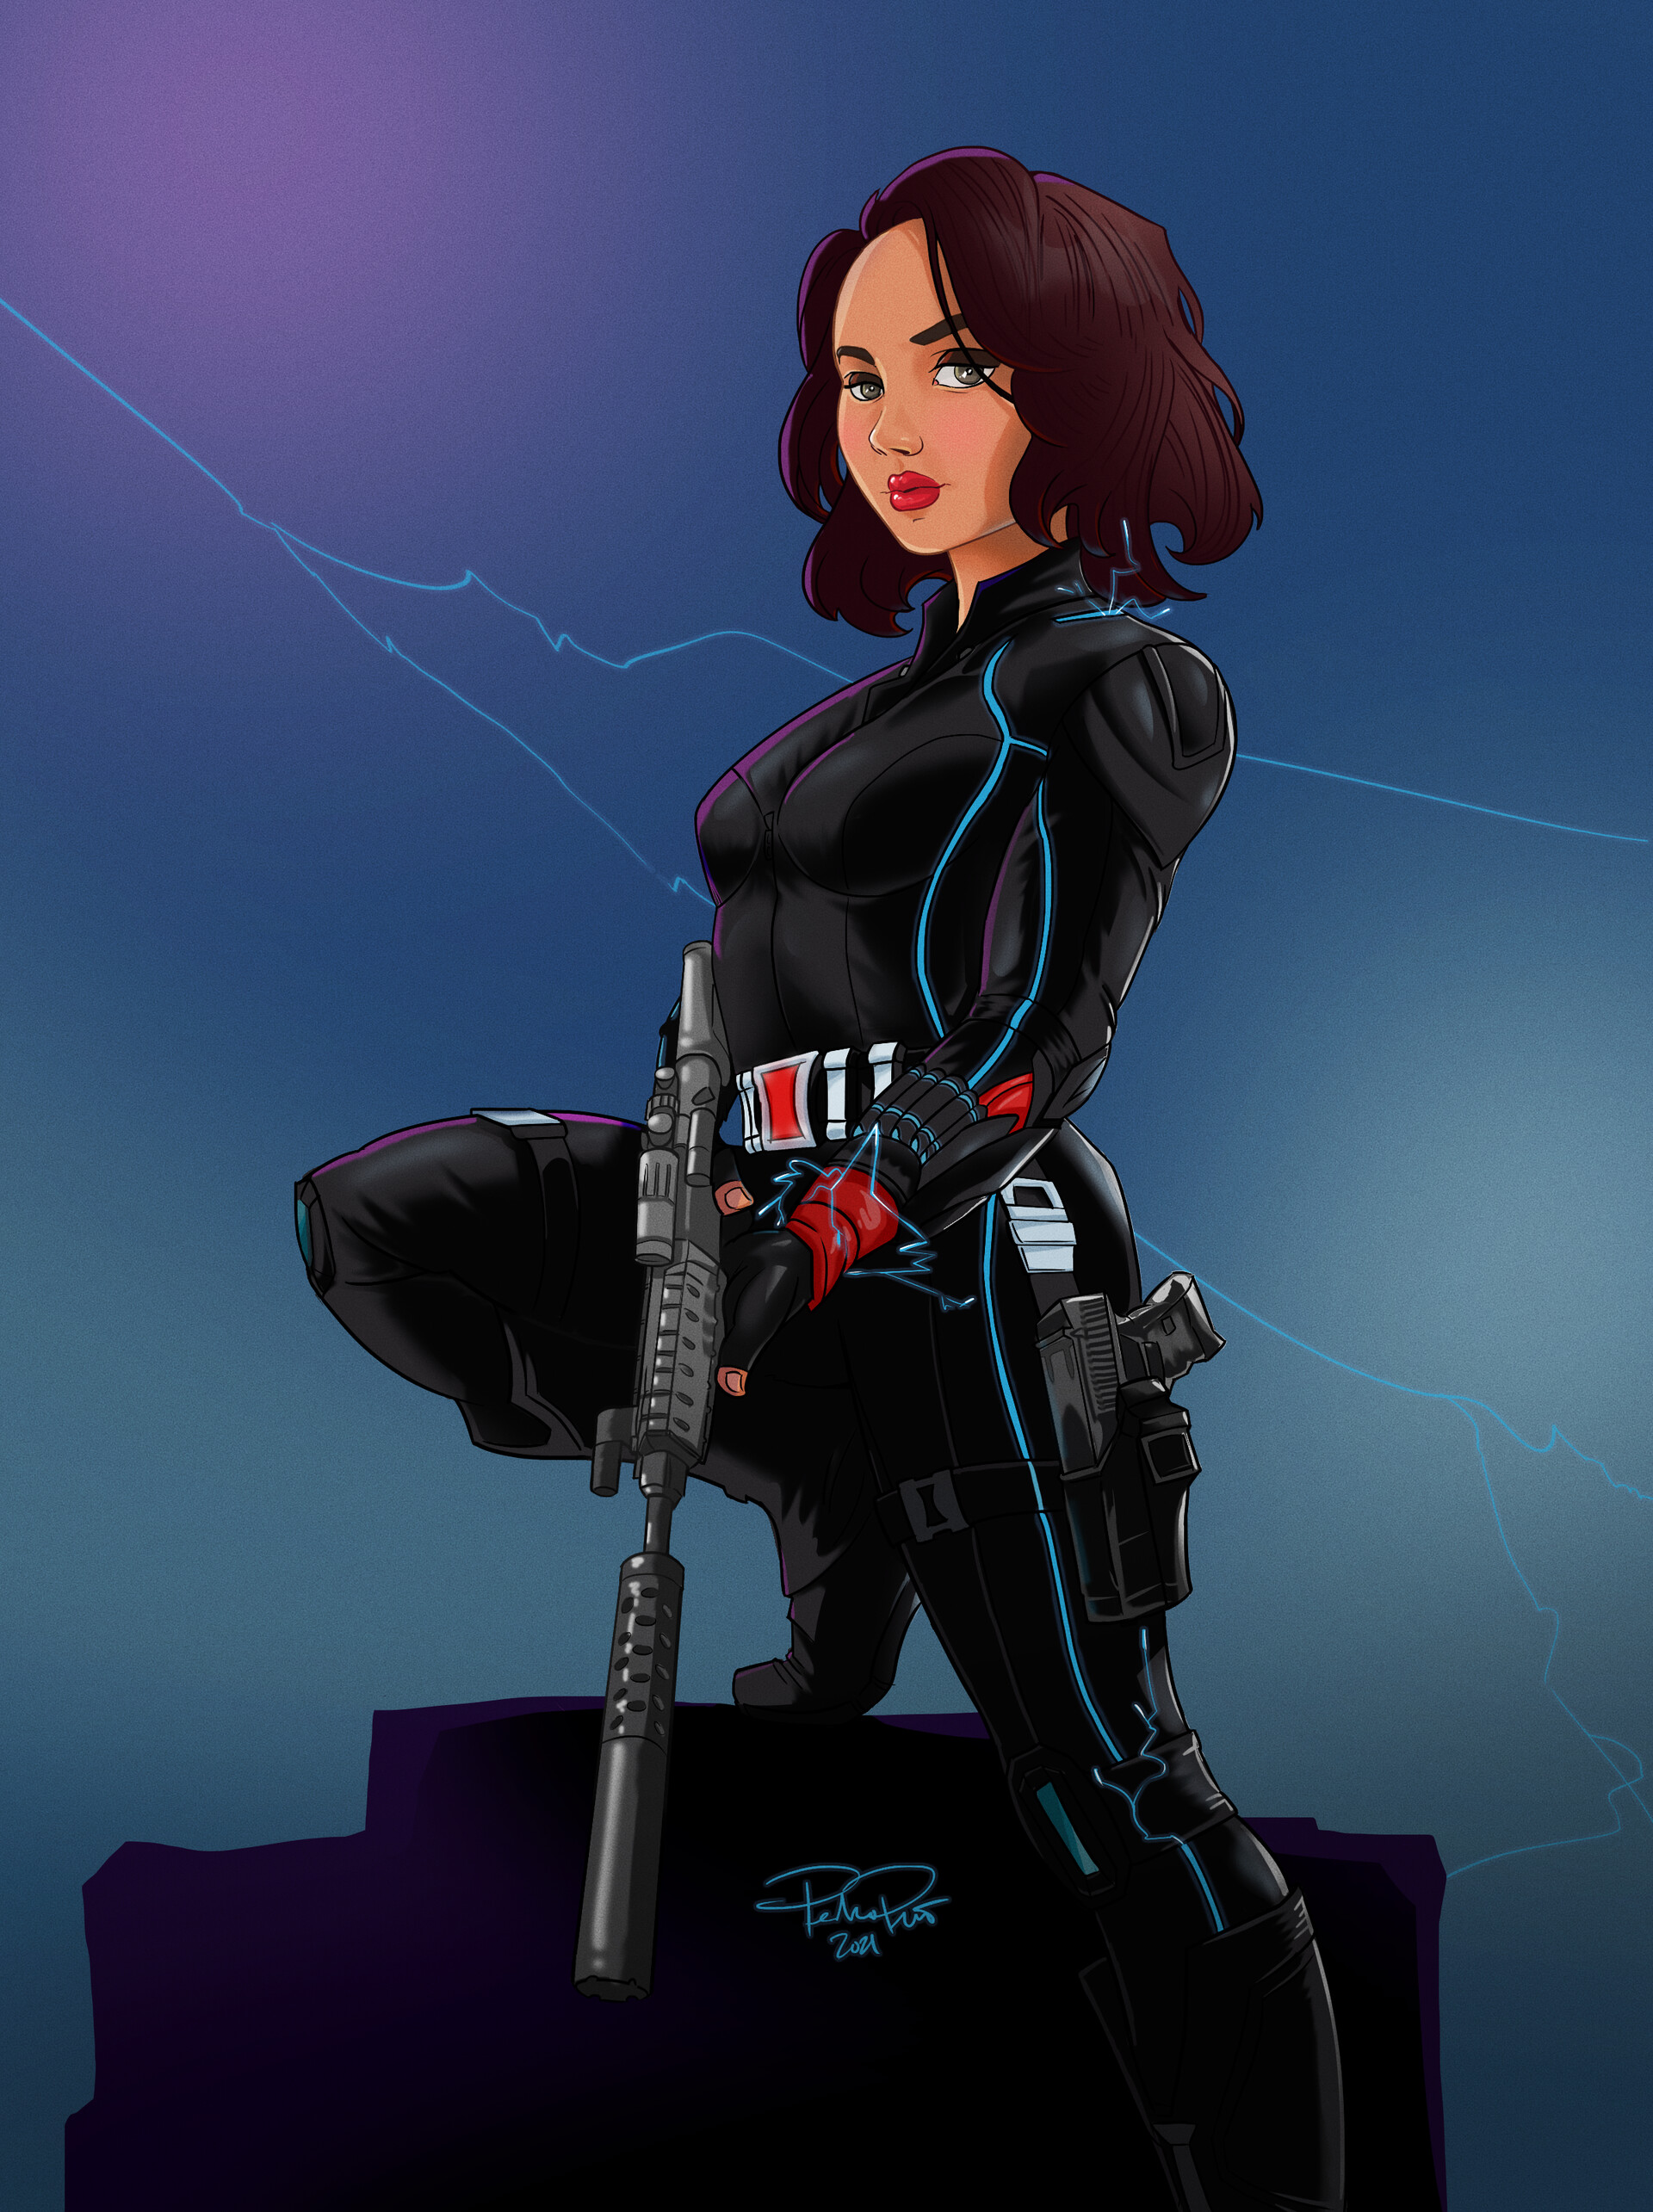 ArtStation - Marvel's Black Widow Character Illustration